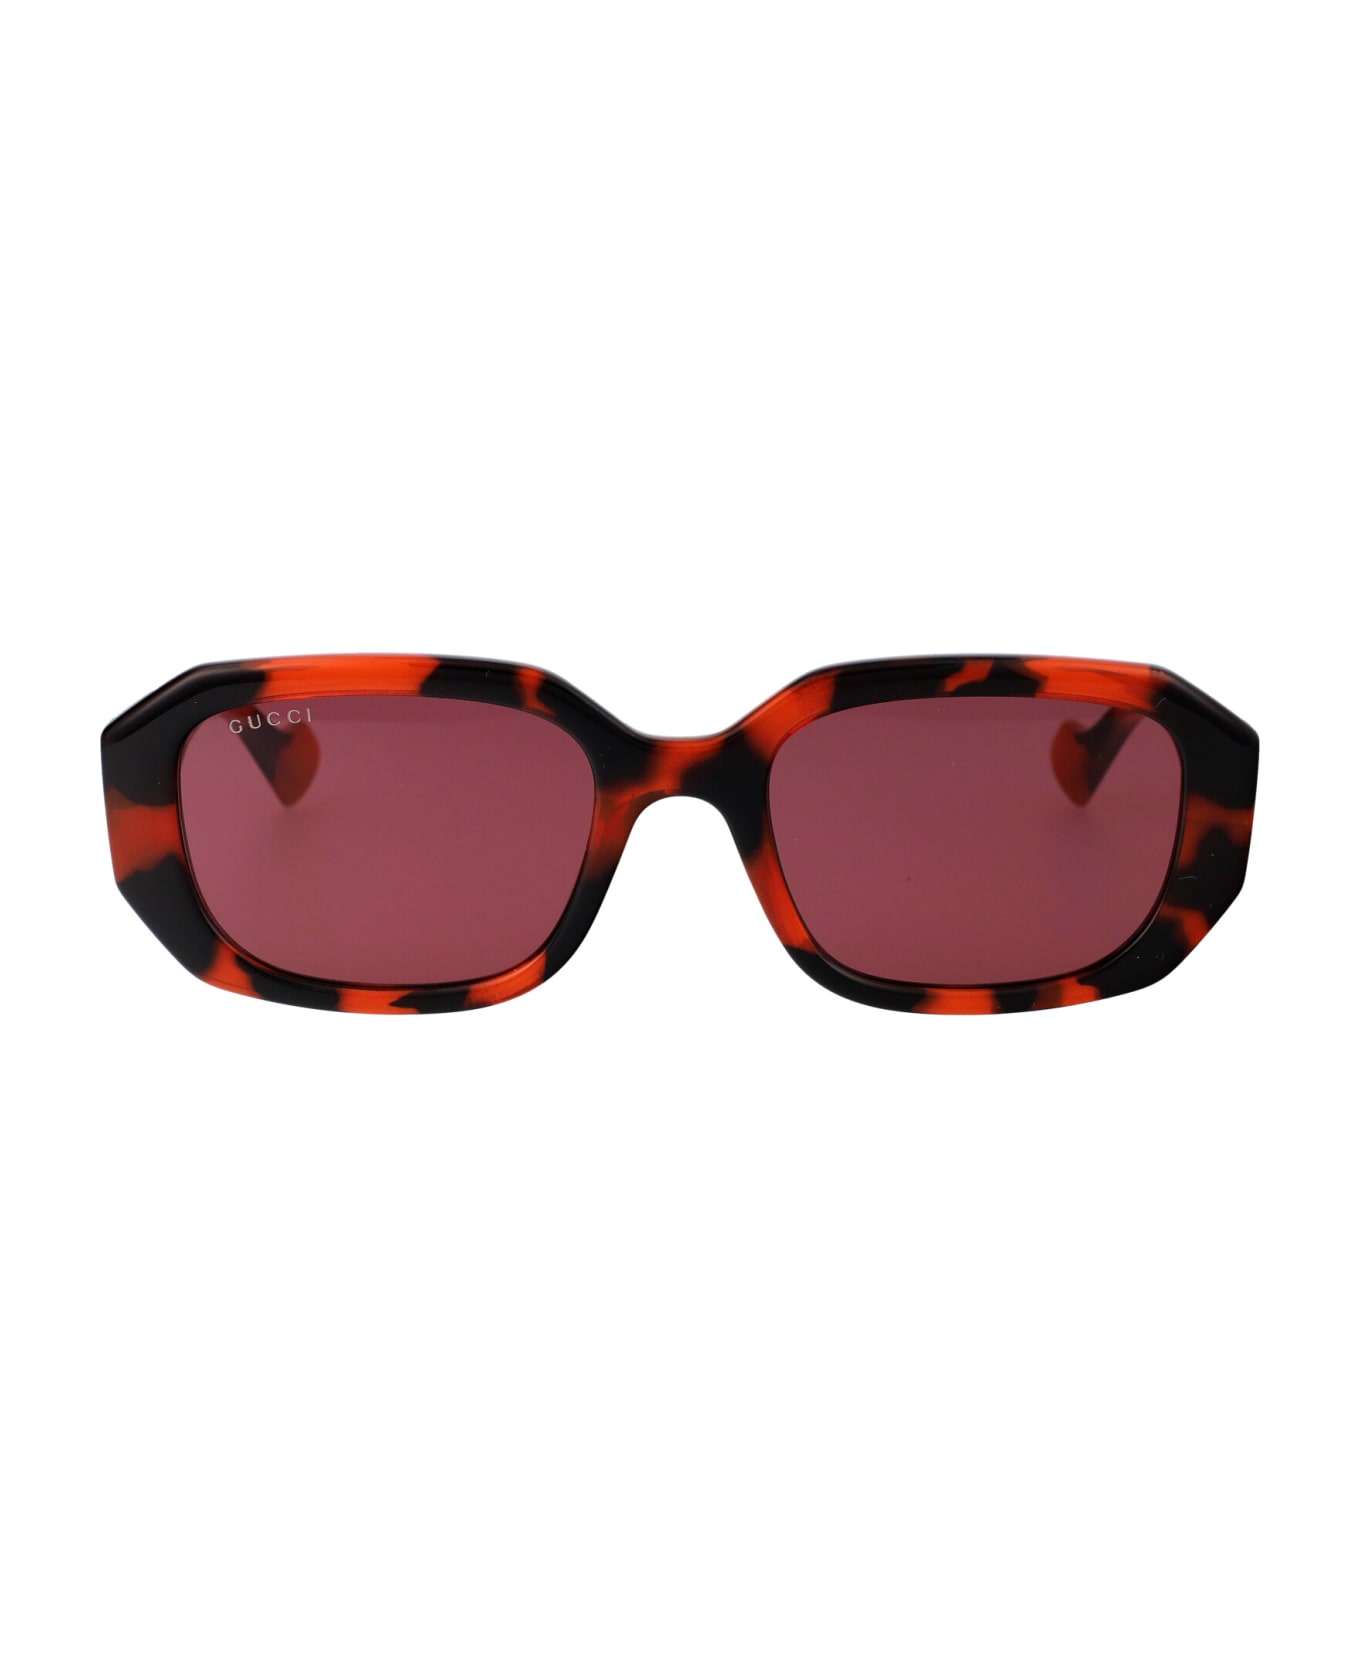 Gucci Eyewear Gg1535s Sunglasses - 005 ORANGE ORANGE VIOLET